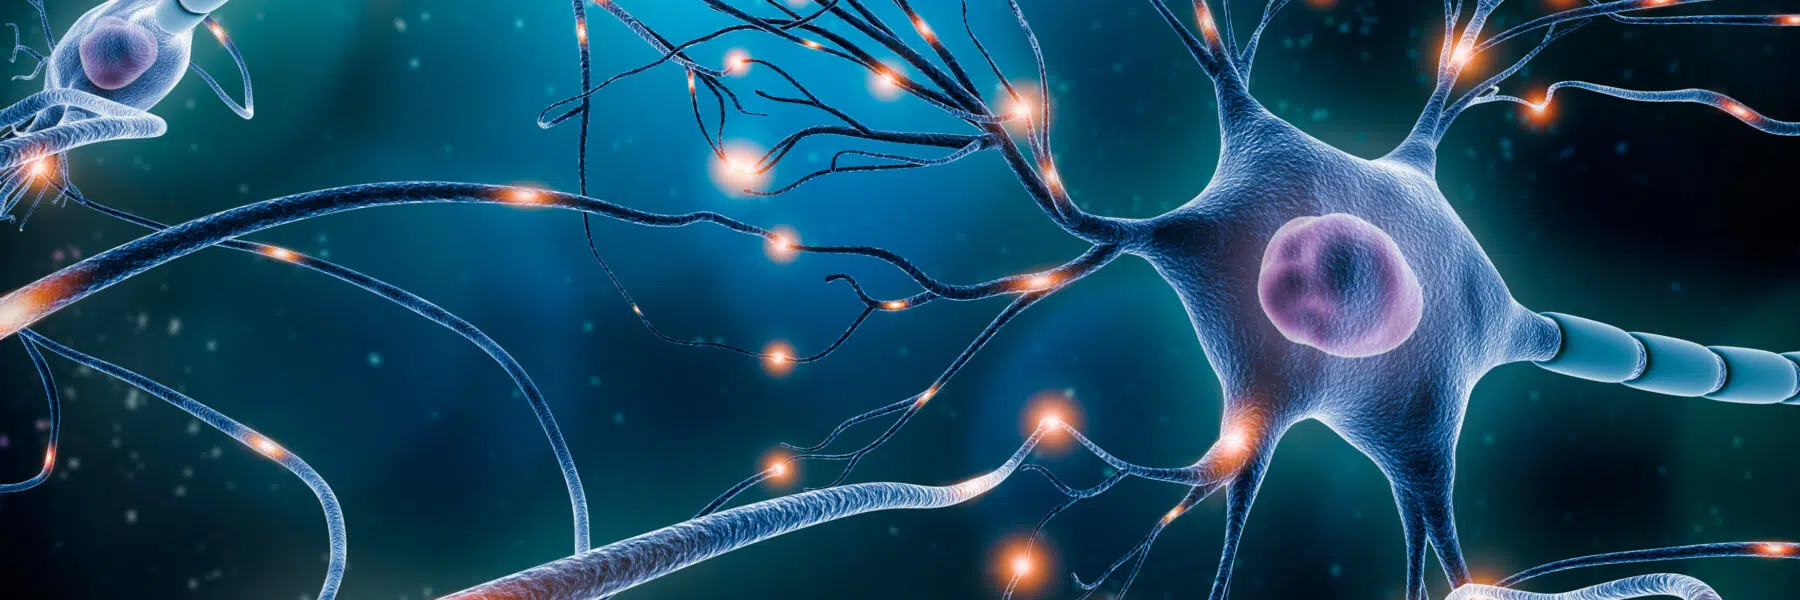 neuro-regeneration-1800x600 image